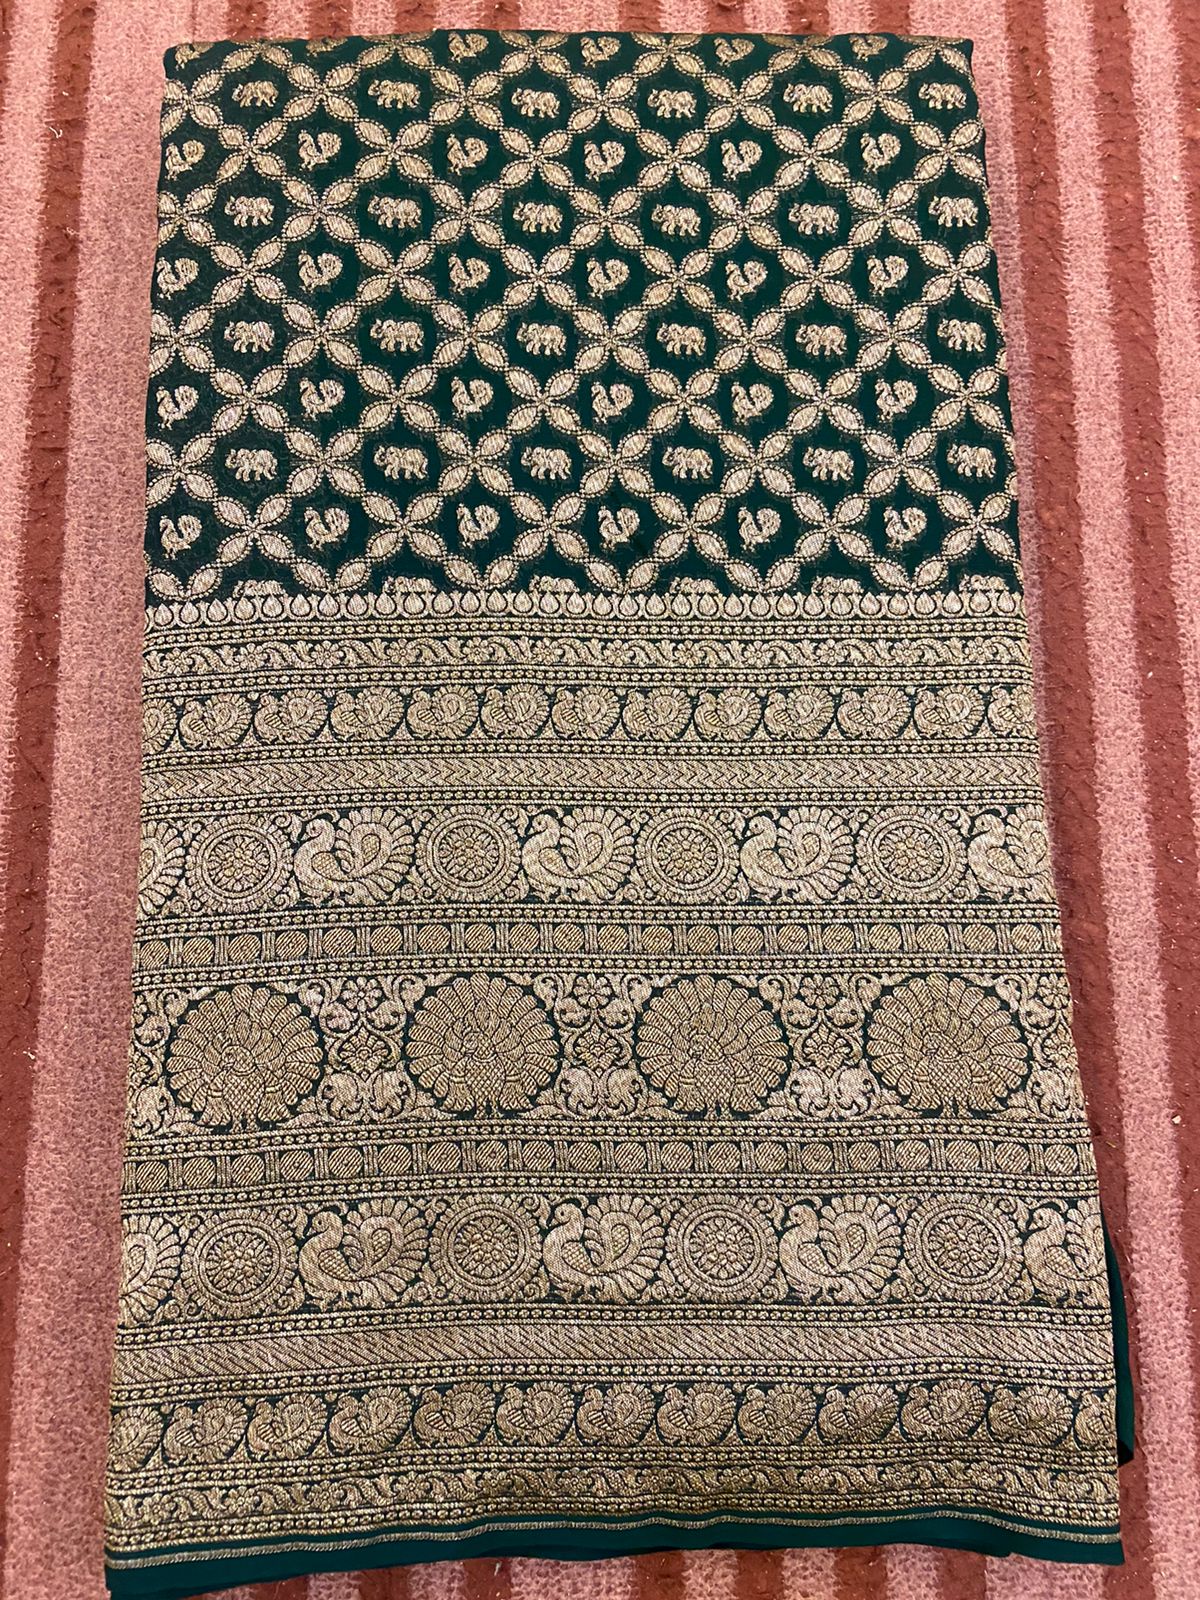  Wide range of saree